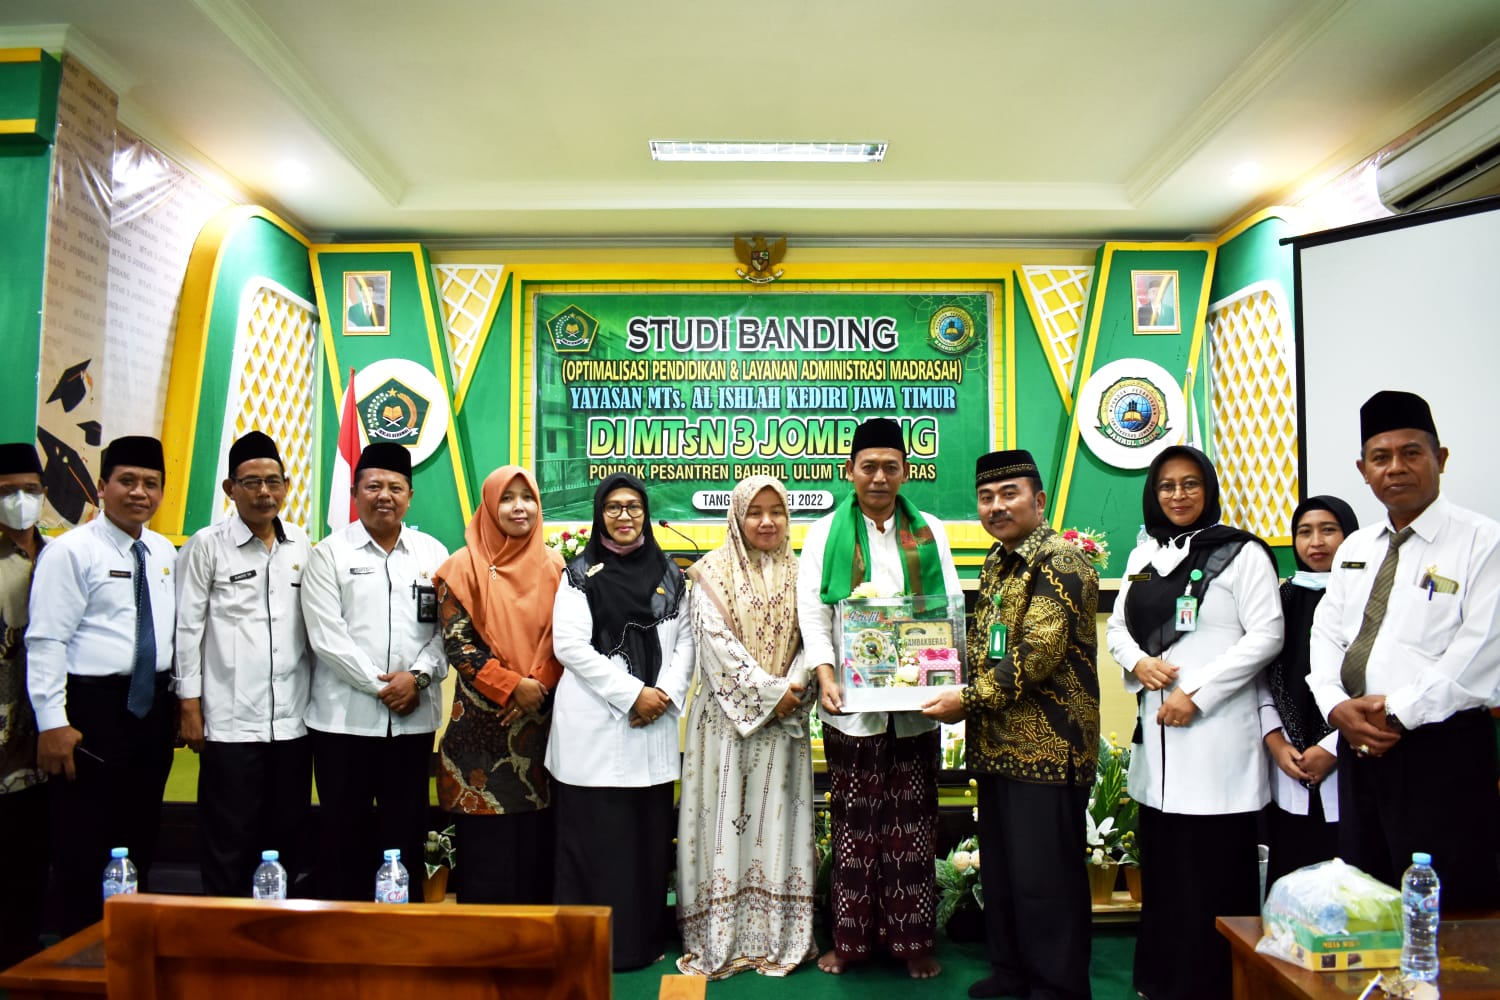 Studi Tiru Optimalisasi Pendidikan & Layanan Administrasi Madrasah Yayasan MTs Al Islah Kediri di MTsN 3 Jombang